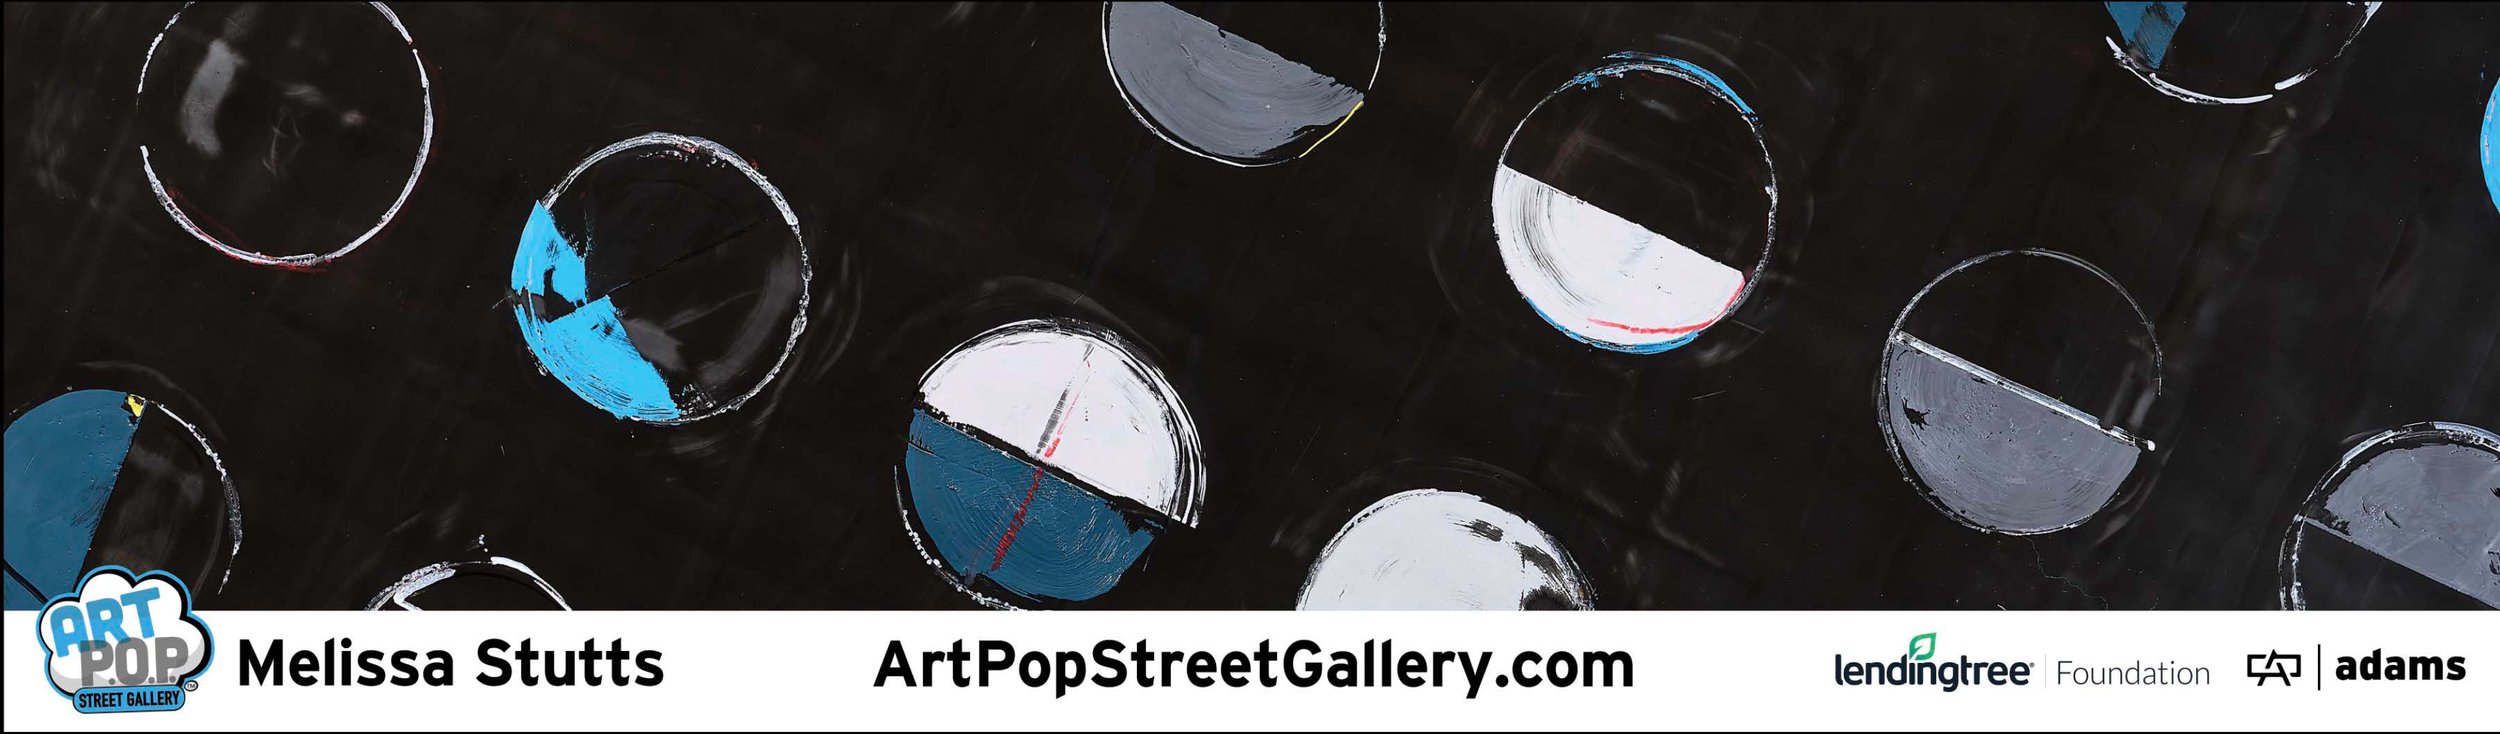 Melissa Stutts Art Pop Street Gallery billboard 